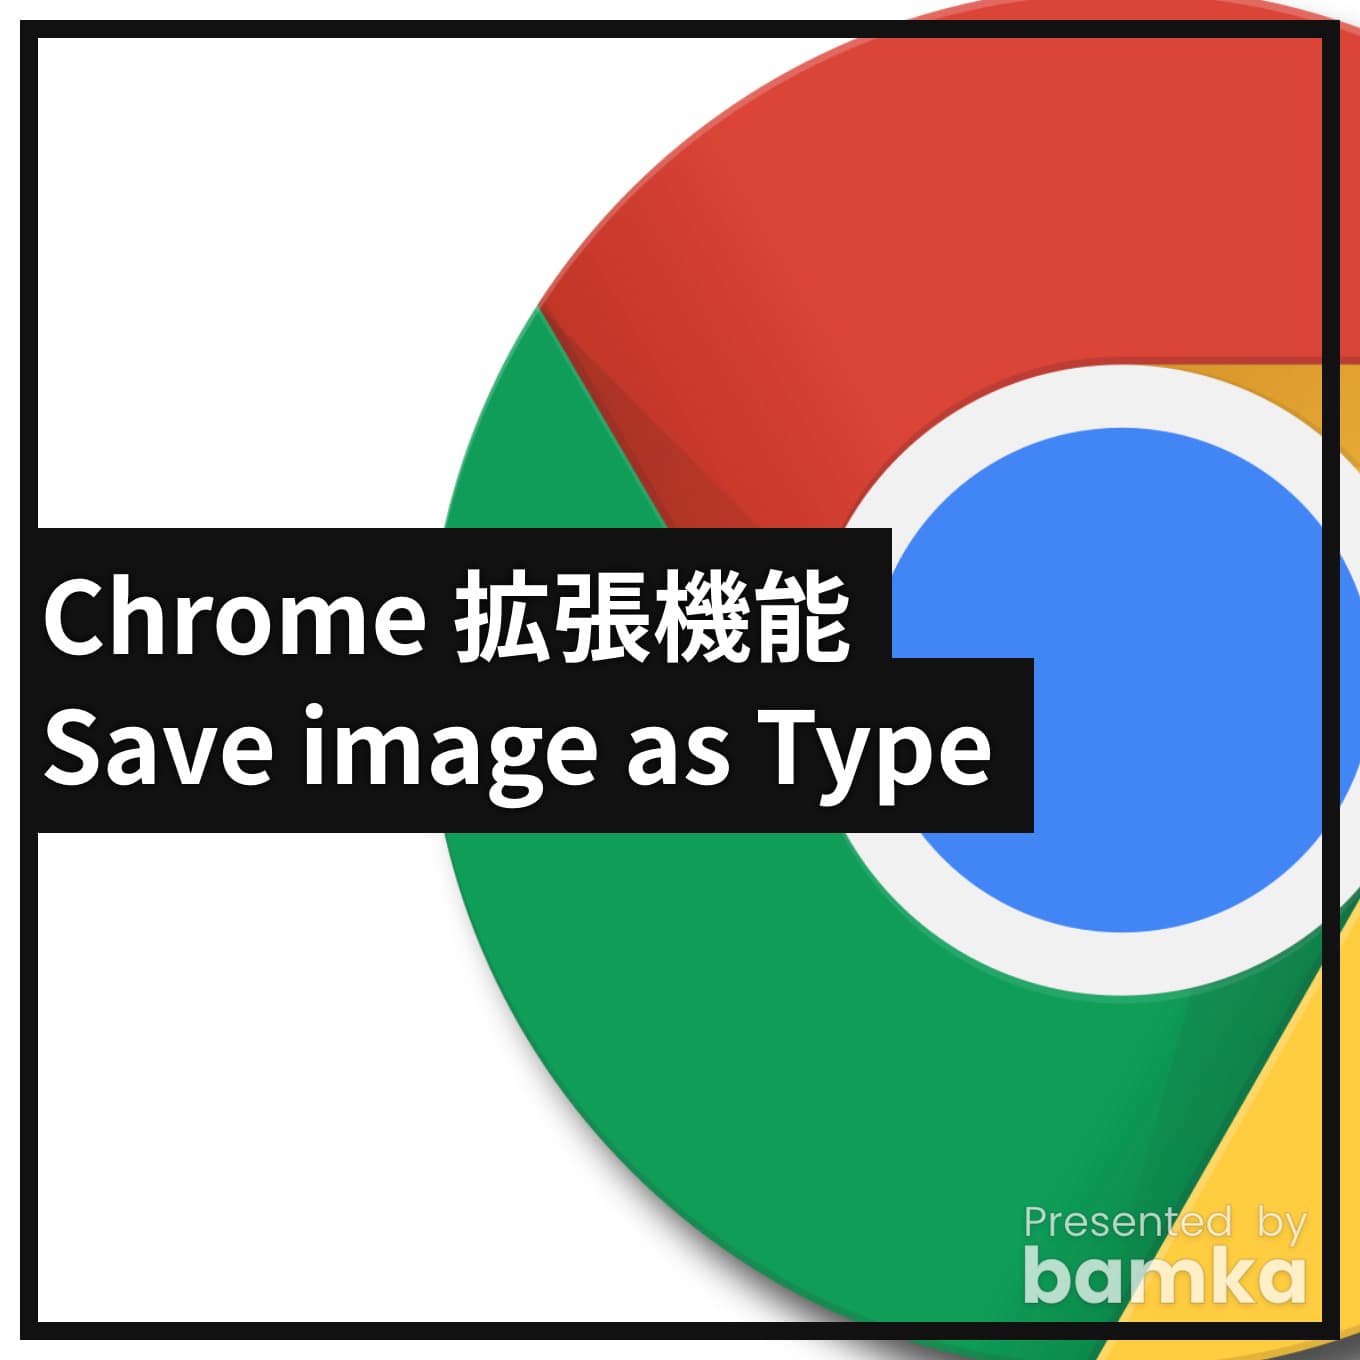 chrome-save-image-as-type